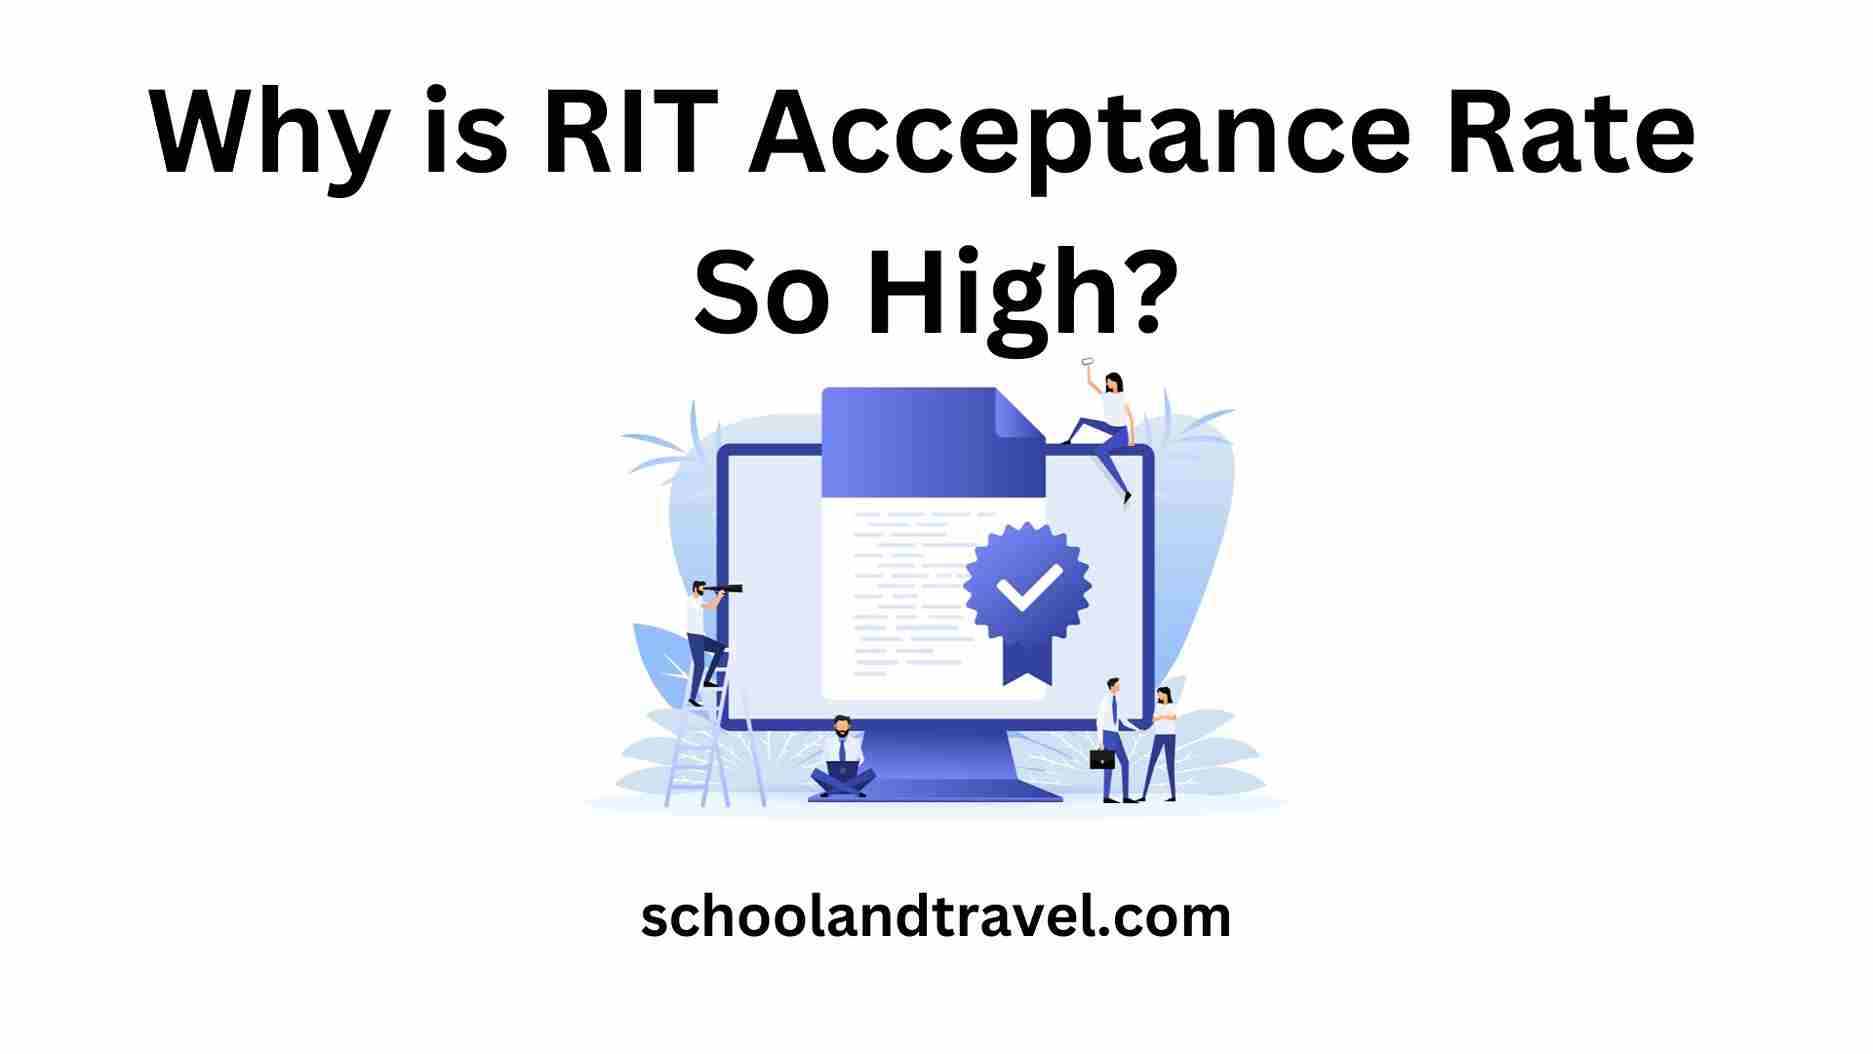 RIT Acceptance Rate